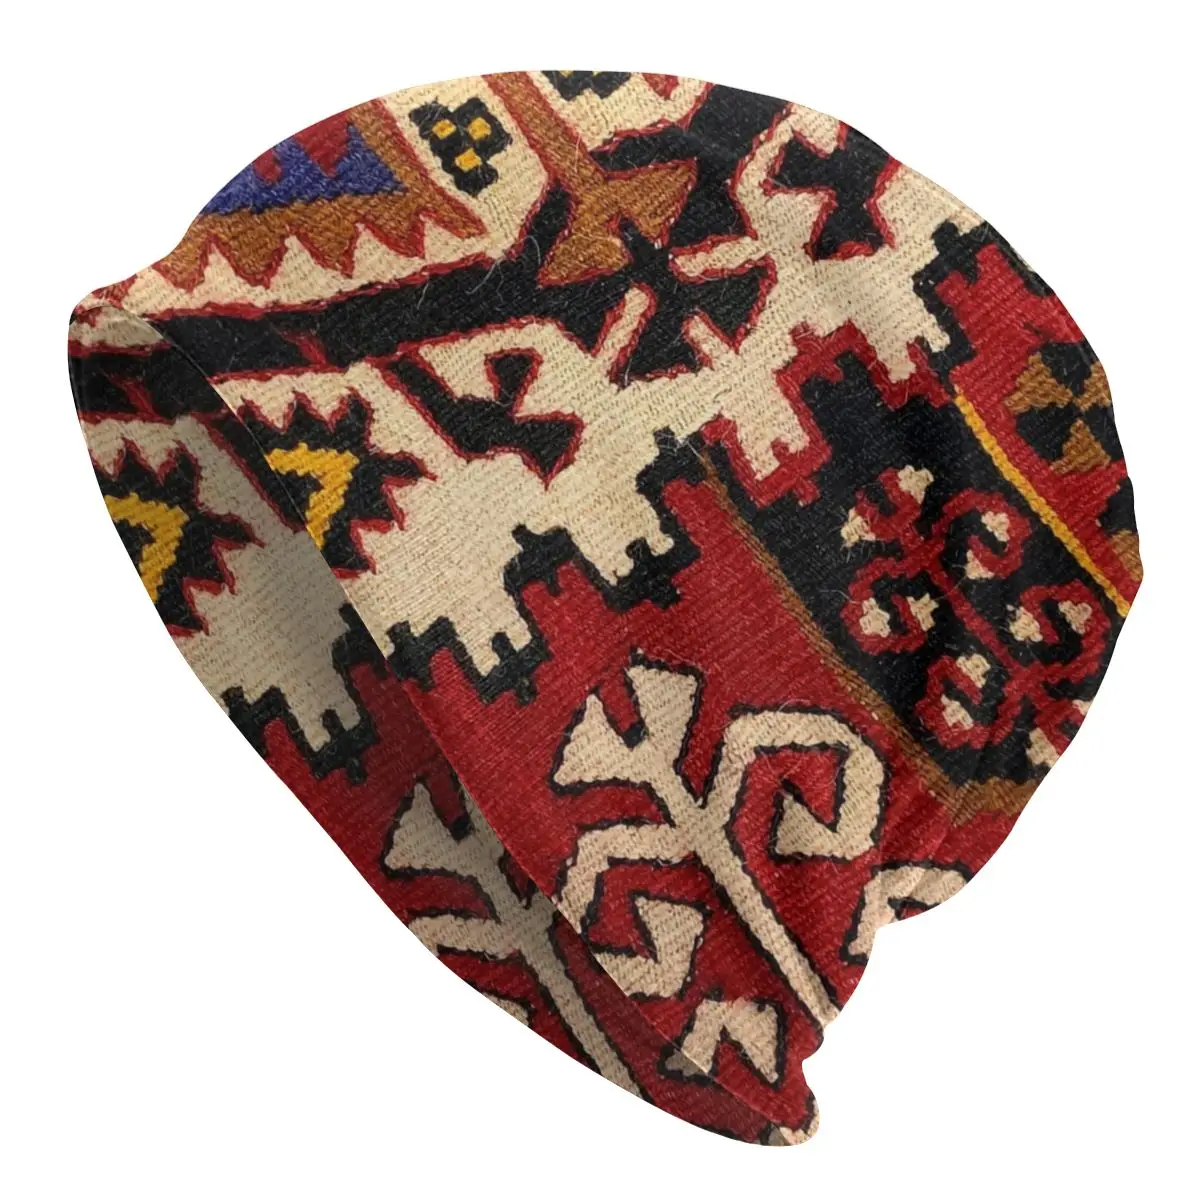 

Retro Boho Turkish Kilim Navaho Weave Woven Textile Beanie Skullies Beanies Hats Persian Tribal Ethnic Art Knitting Bonnet Cap